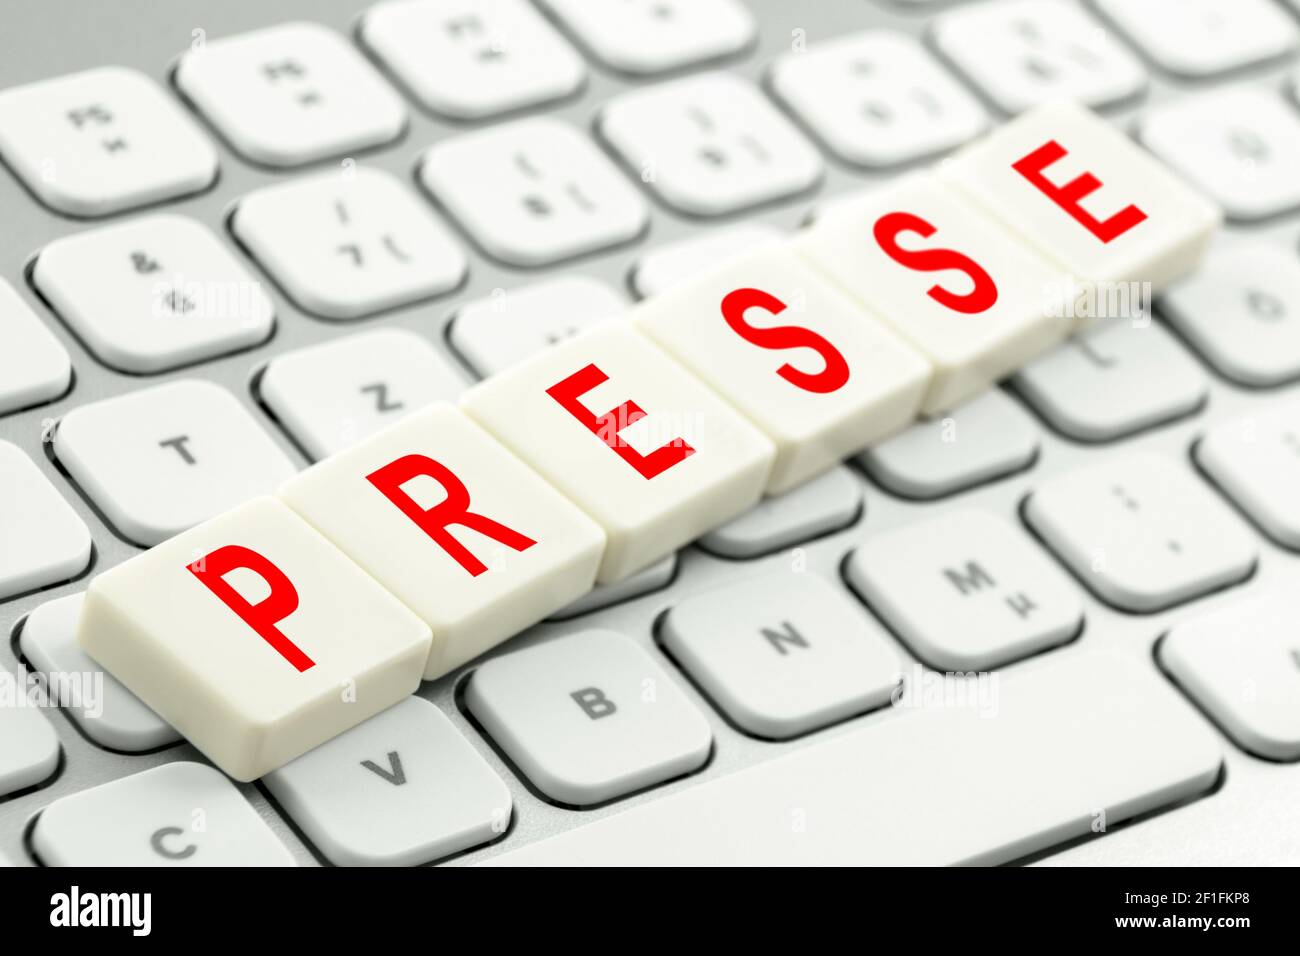 Presse Symbol und PC Keyboard Stock Photo